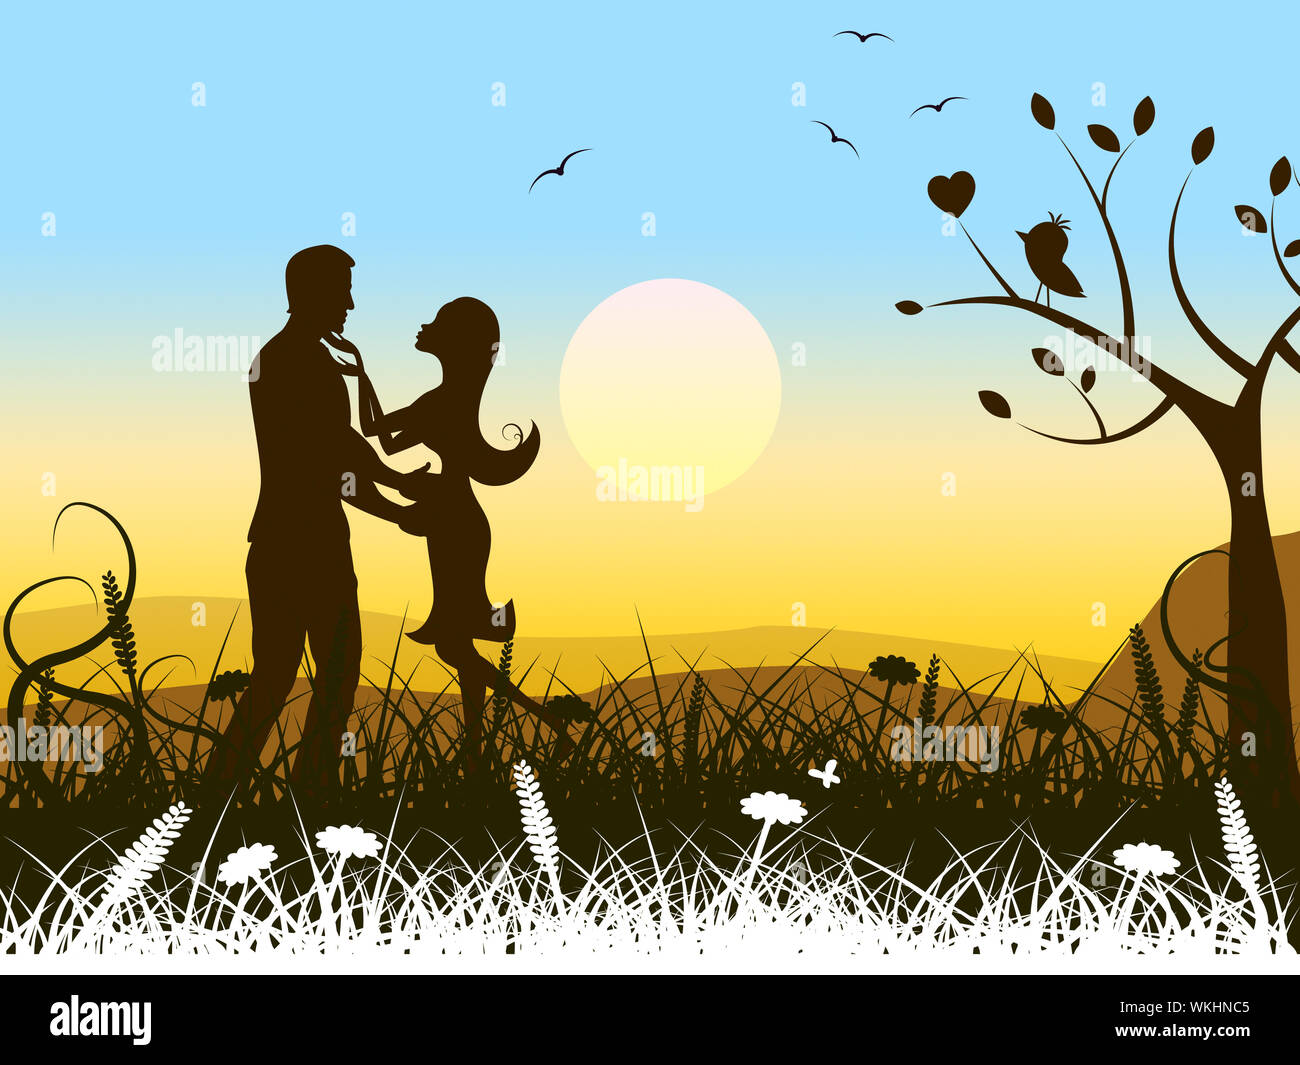 Romance Summer Representing Love Season And Warmth Stock Photo Alamy